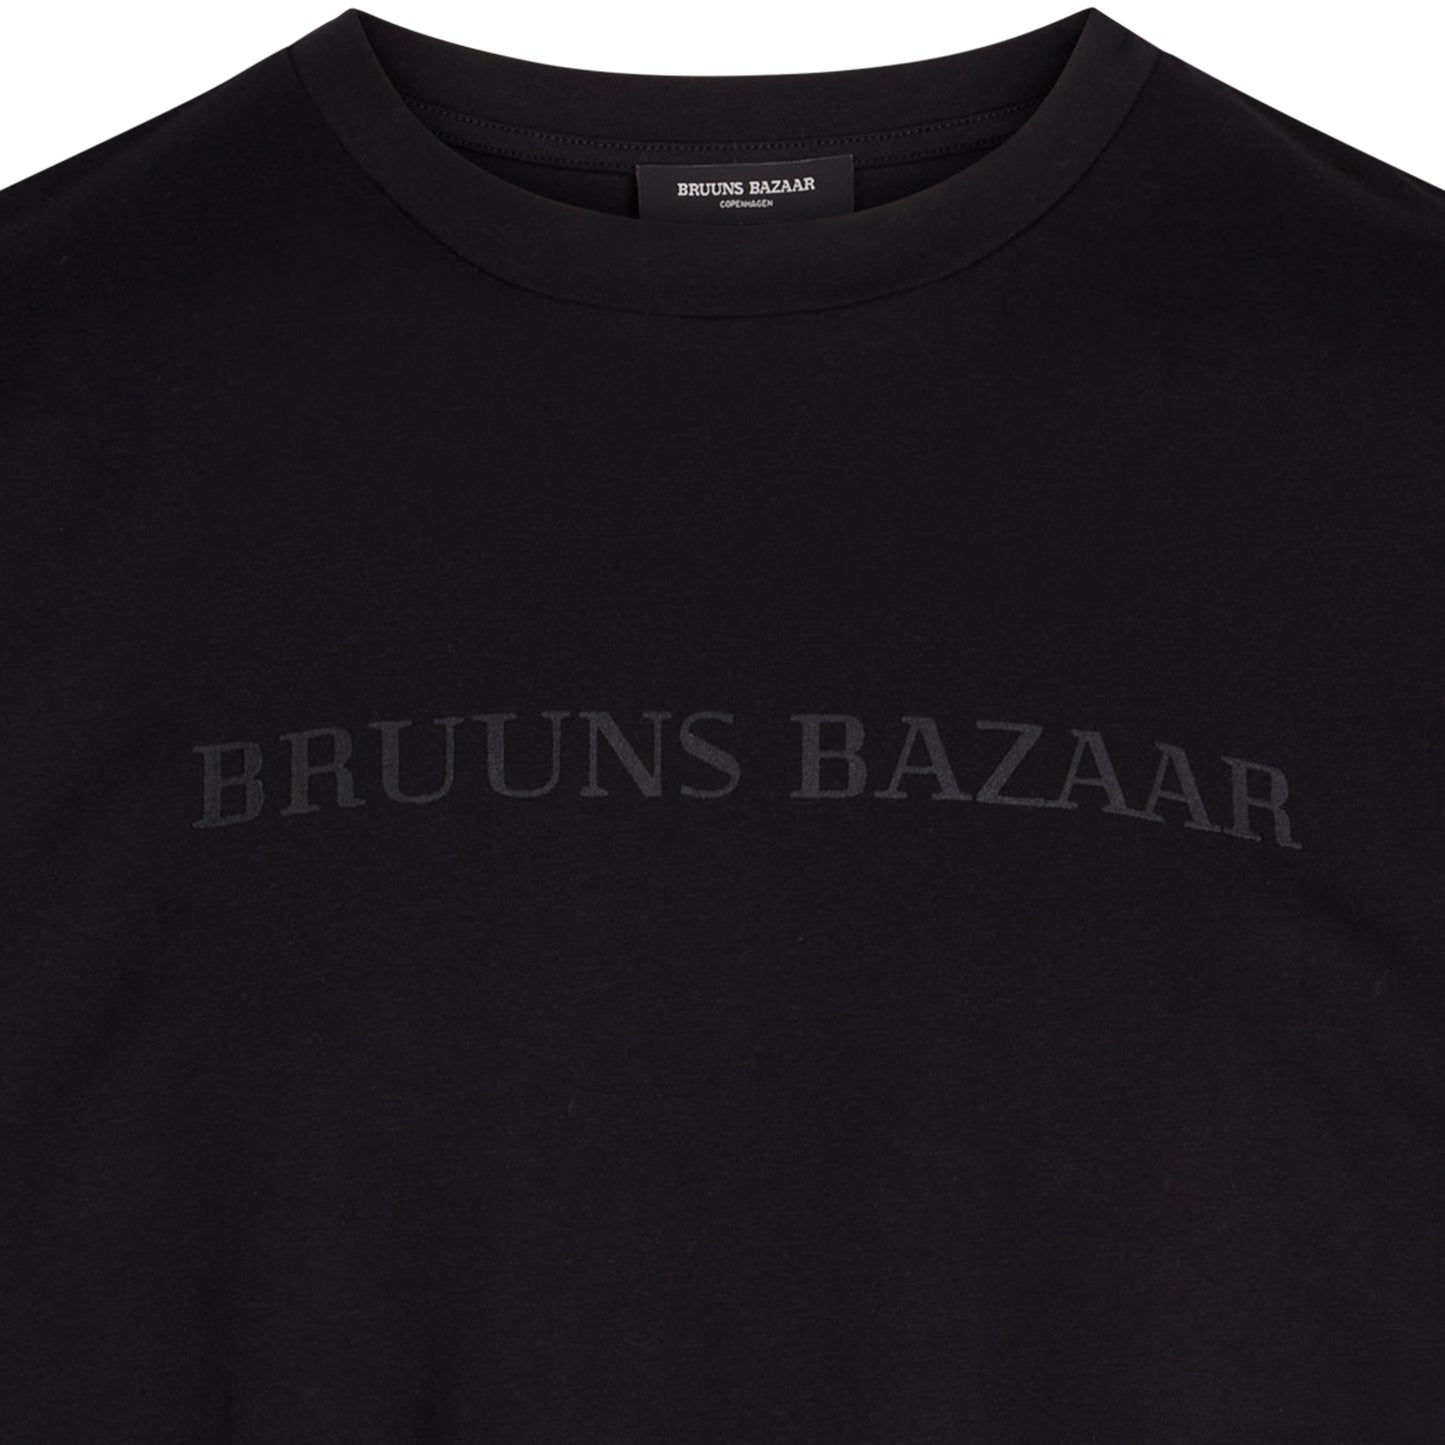 Bruuns Bazaar Men - GusBBLogo tee - Black